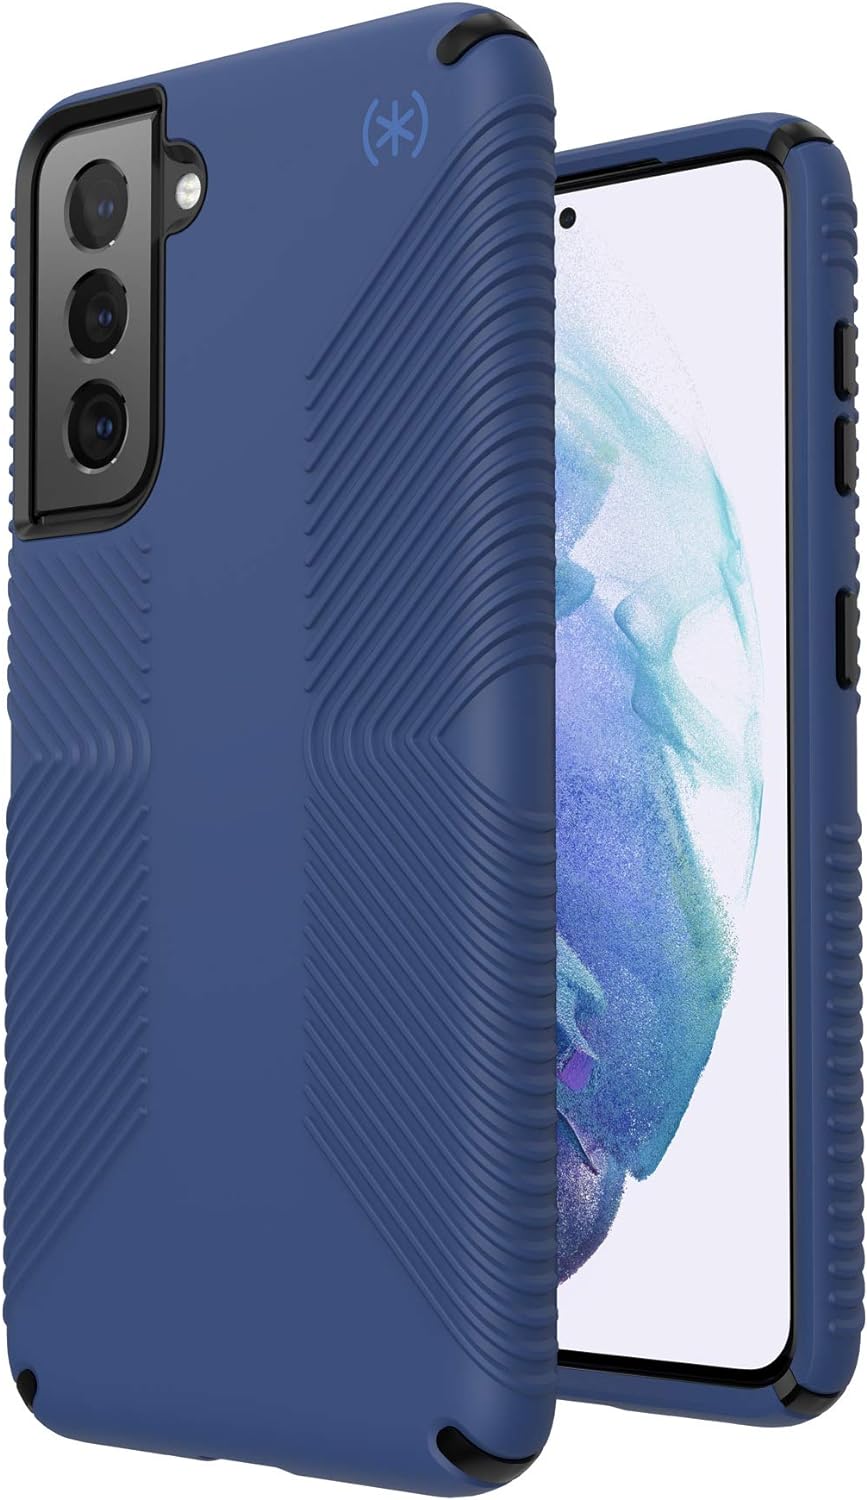 Speck Presidio2 Grip Samsung Galaxy S21 5G Case, 13ft Drop Protection - Coastal Blue/Black